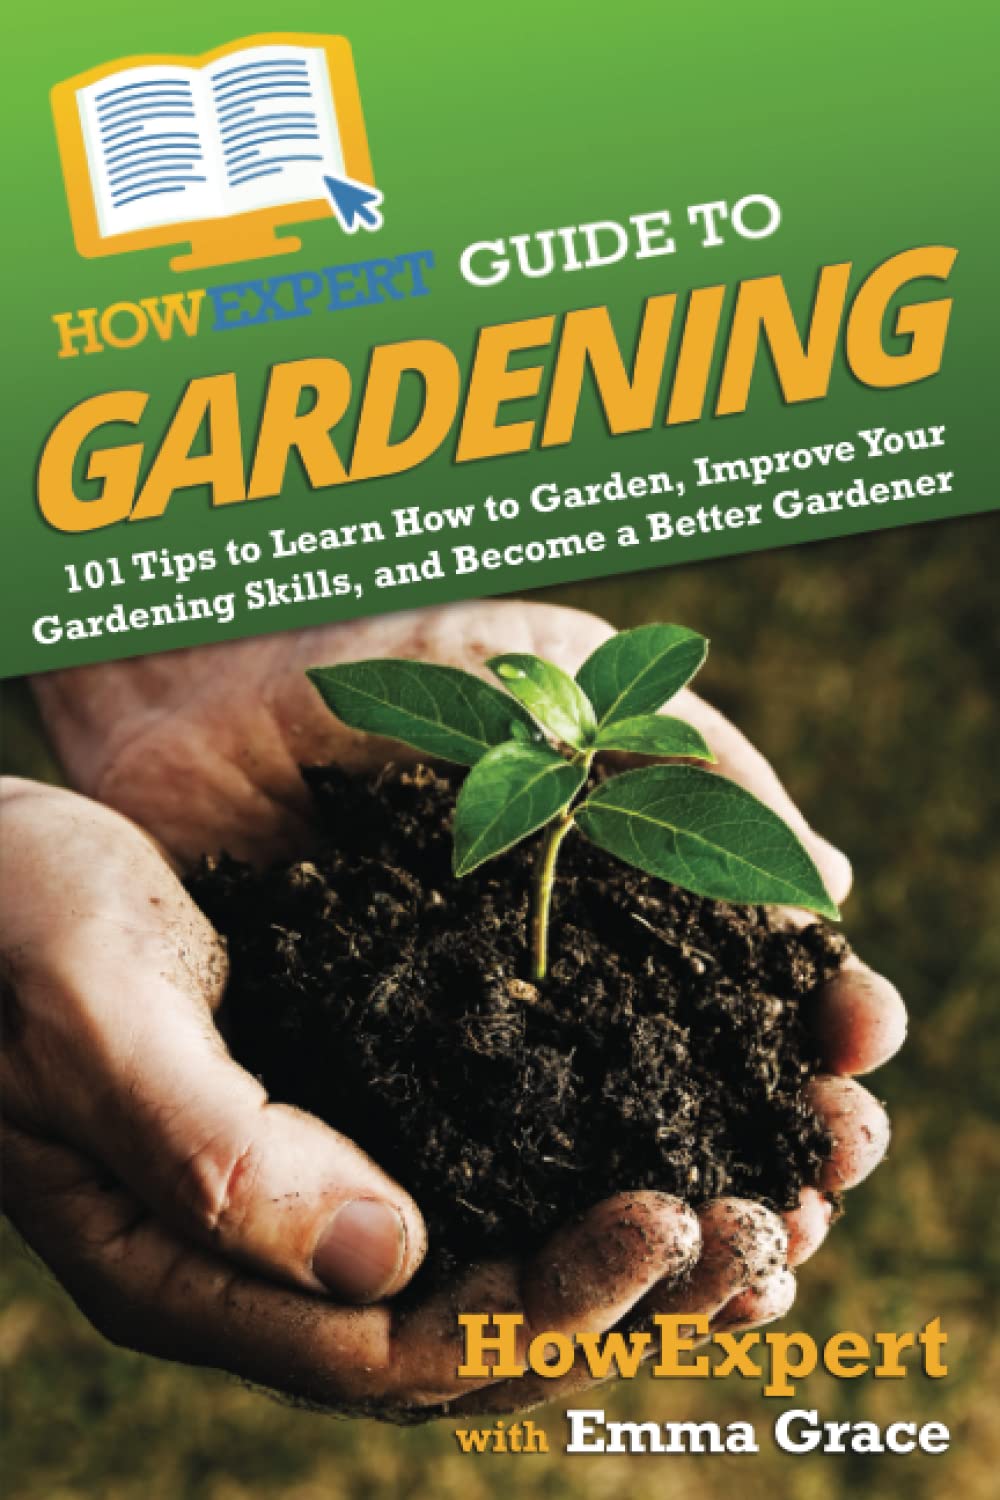 tips if gardens